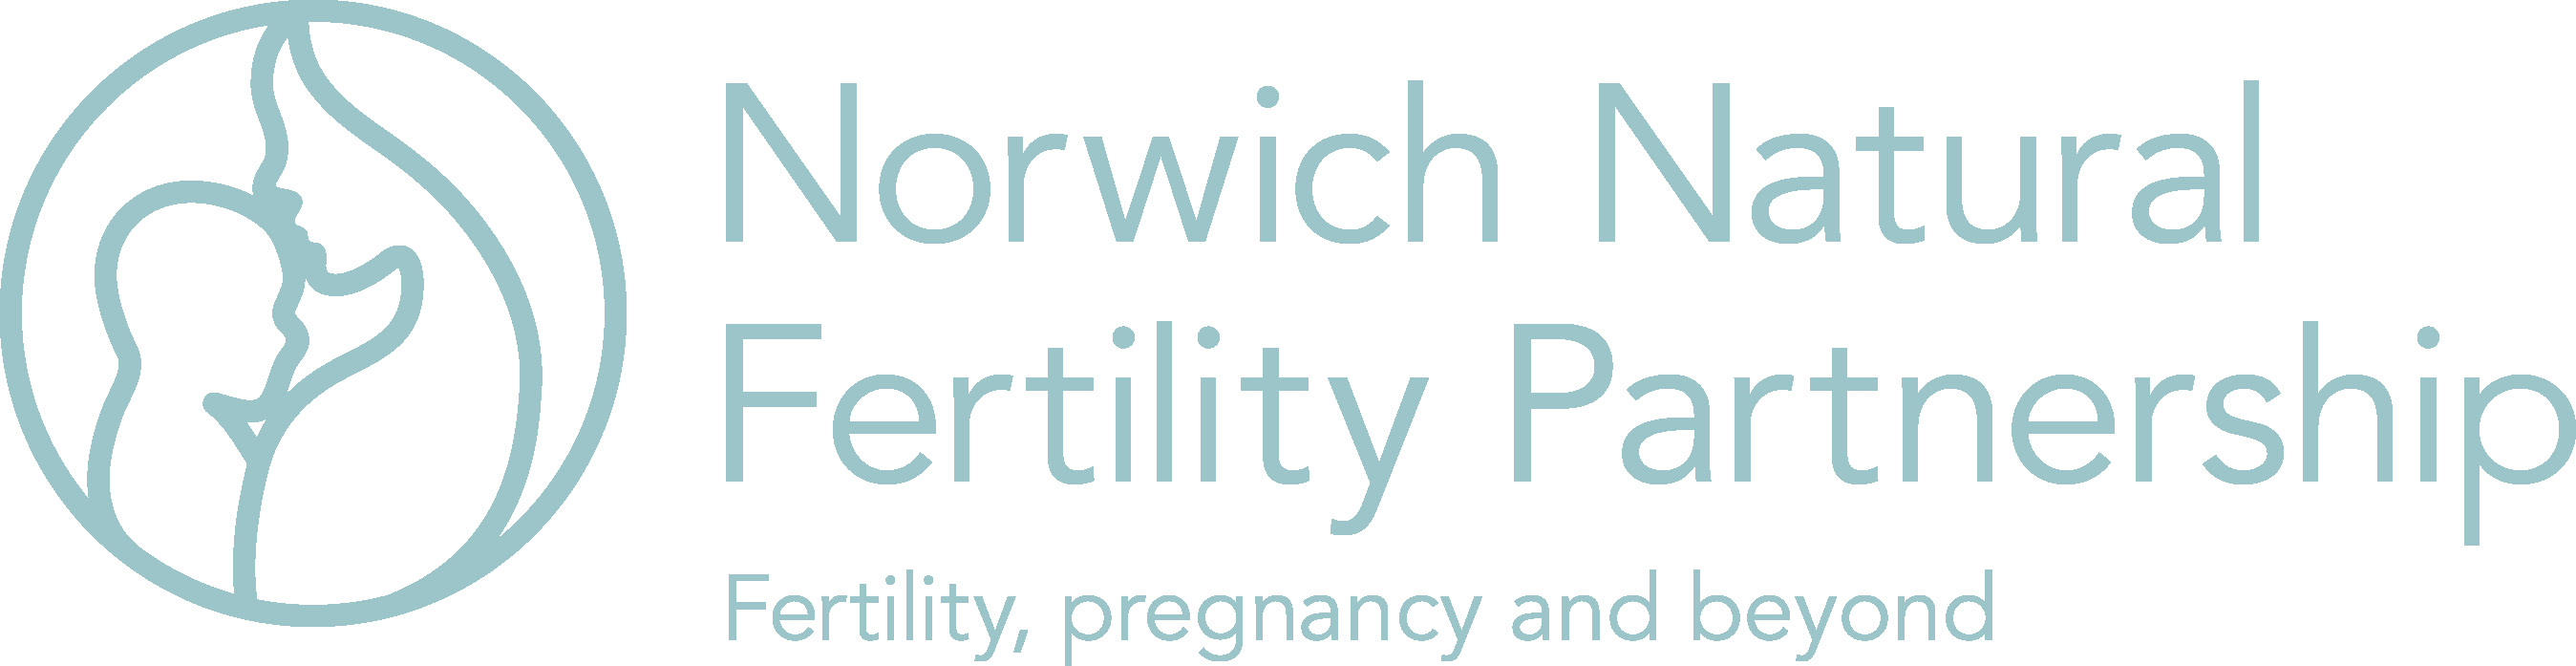 Norwich Natural Fertility Partnership